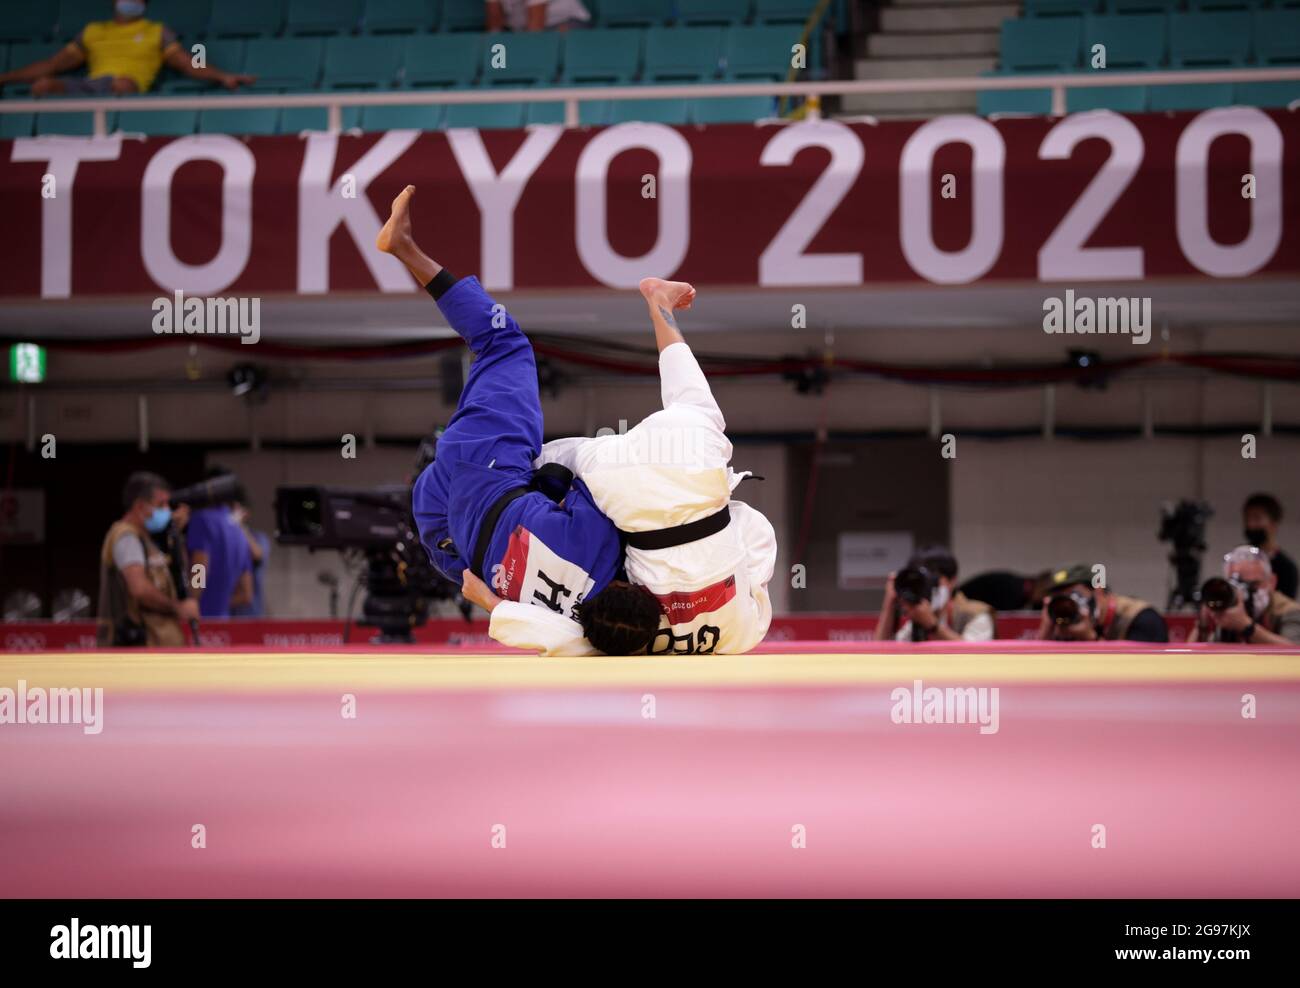 Olympische Spiele 2020 in Tokio - Judo - 52 kg der Frauen - Letzte 32 - Nippon Budokan - Tokio, Japan - 25. Juli 2021. Tetiana Levytska-Shukvani aus Georgien im Kampf gegen Sabiana Anestor aus Haiti REUTERS/Hannah McKay Stockfoto